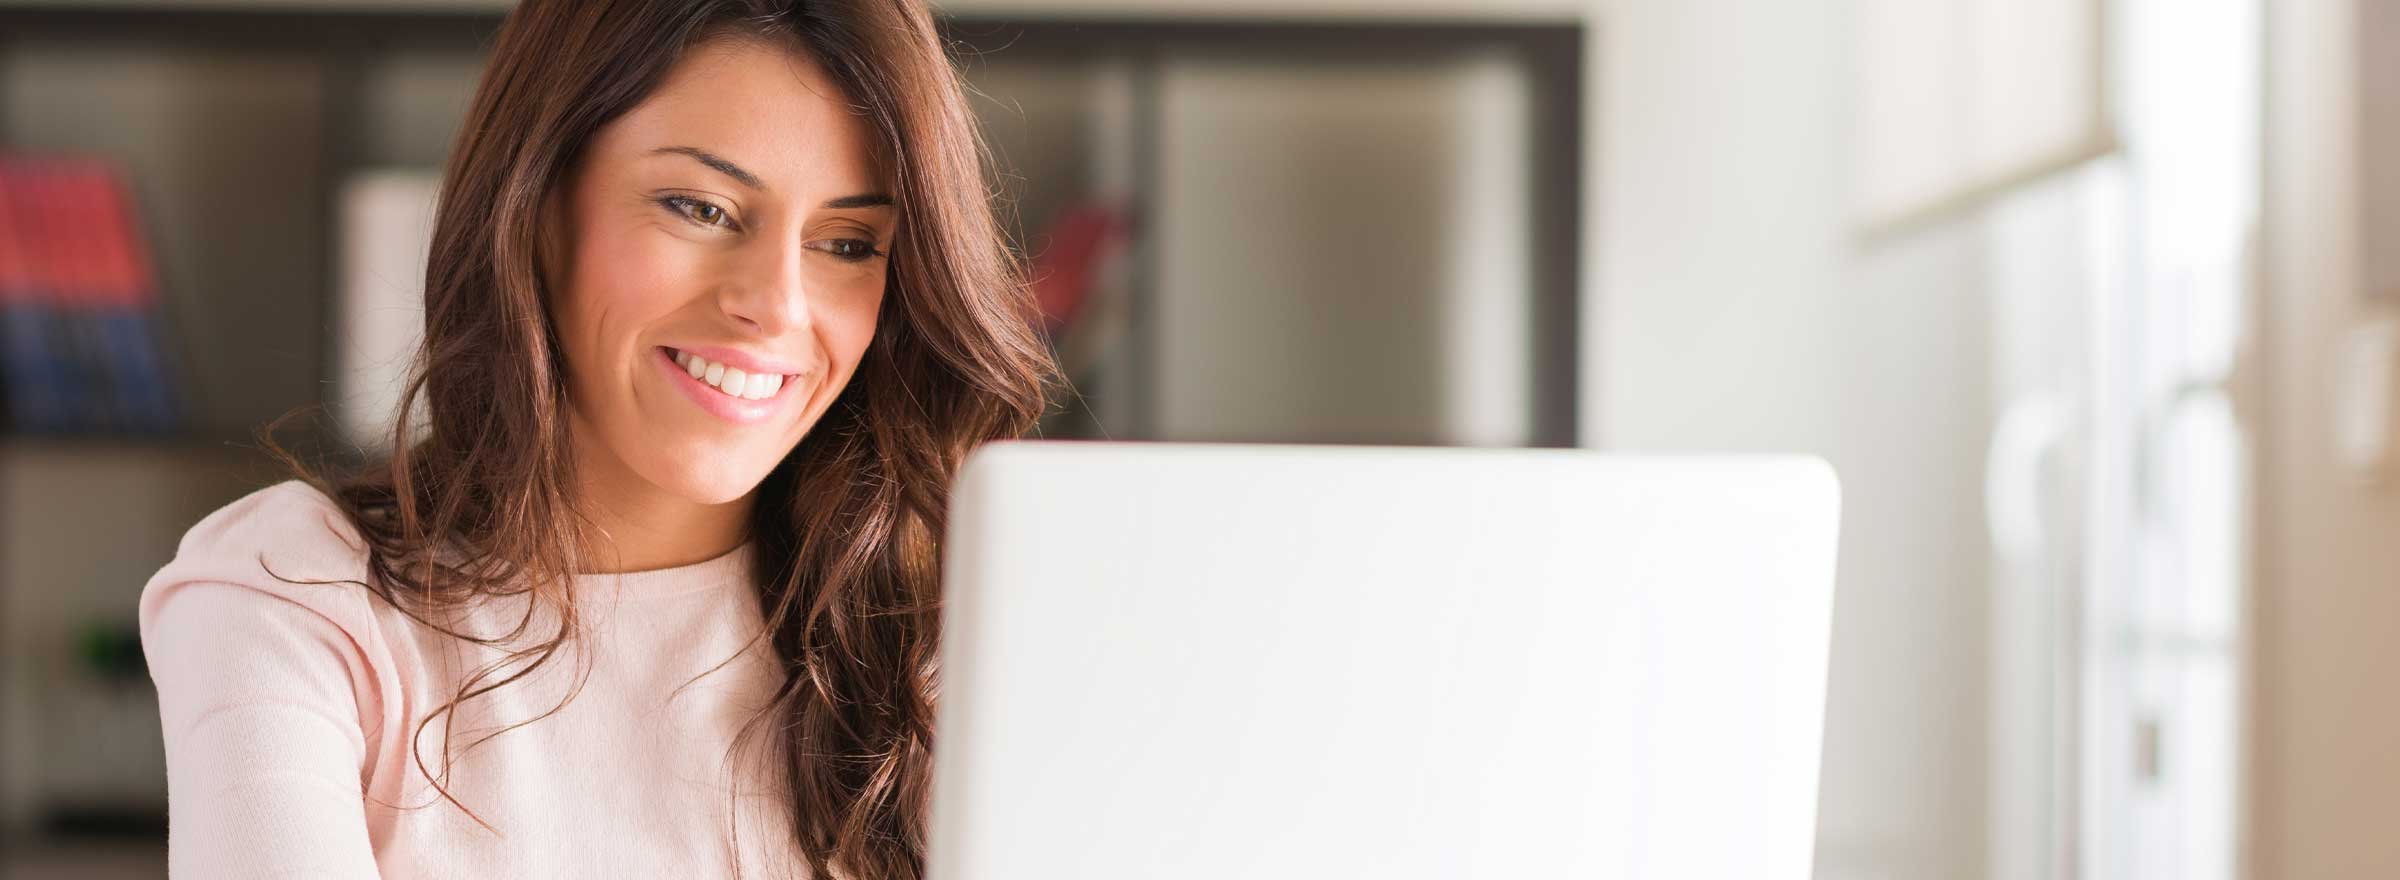 woman smiling at laptop screeen